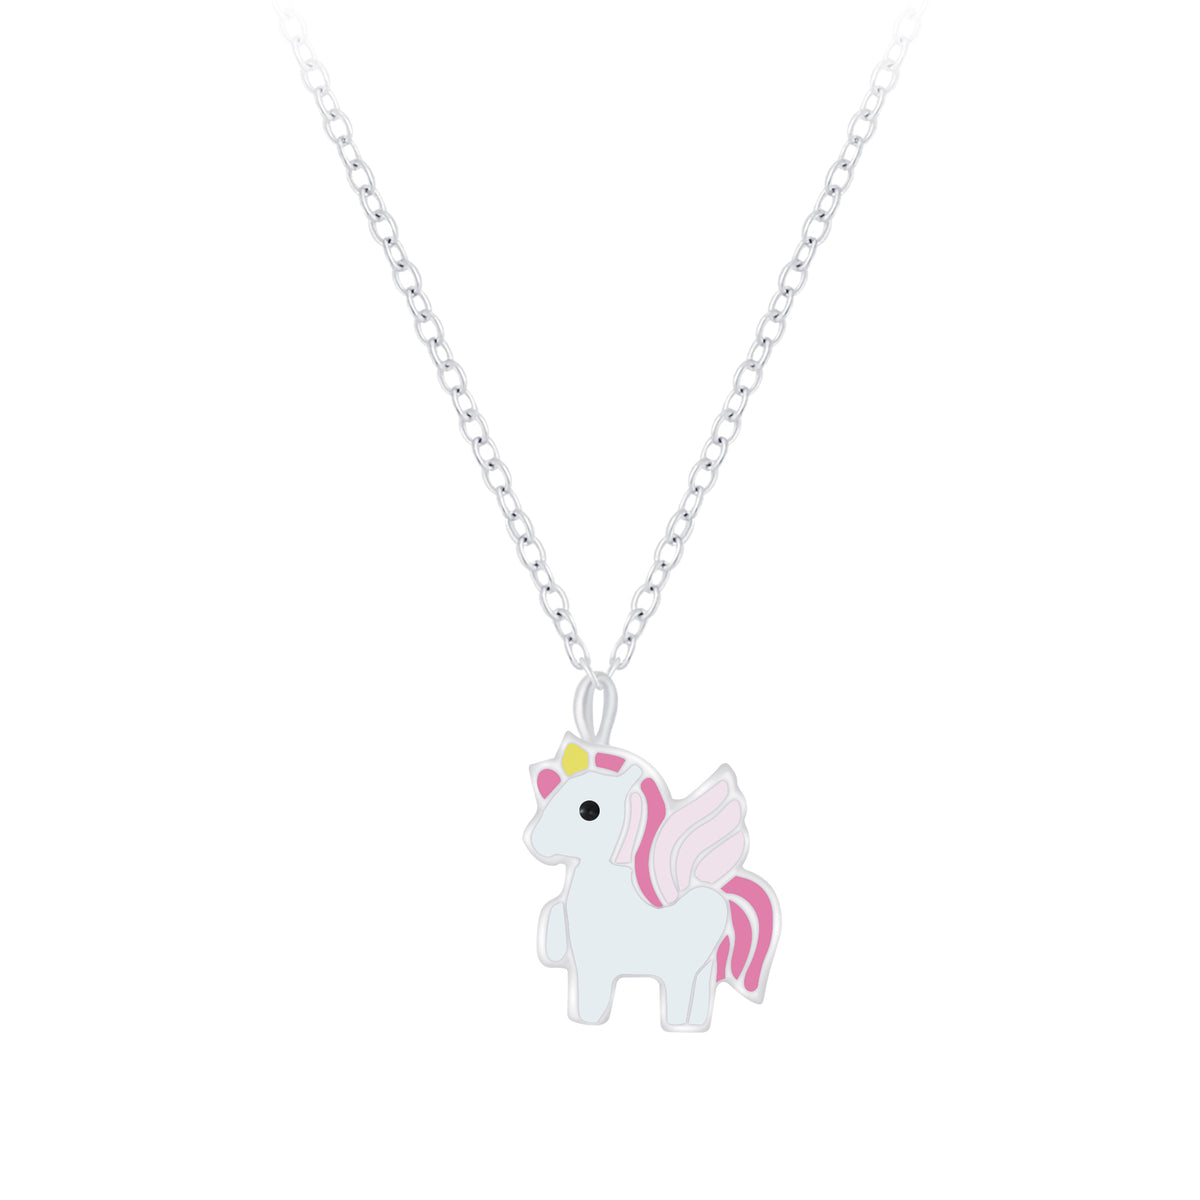 Unicorn Whole Pink Necklace with Pendant